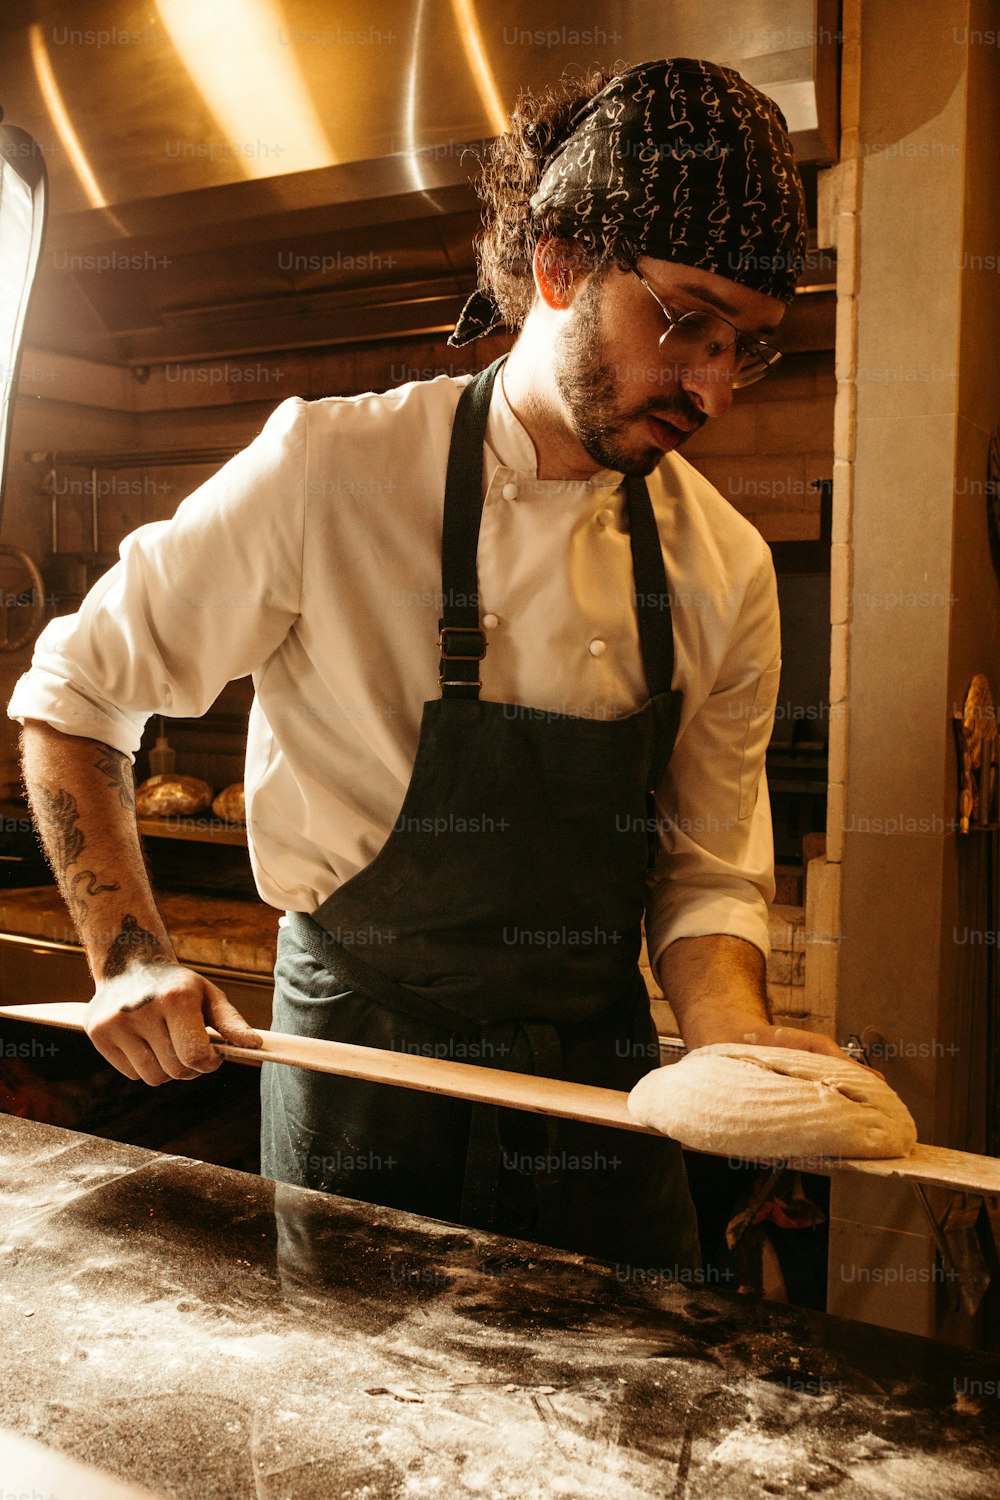 Un uomo che indossa un grembiule e cucina in una cucina